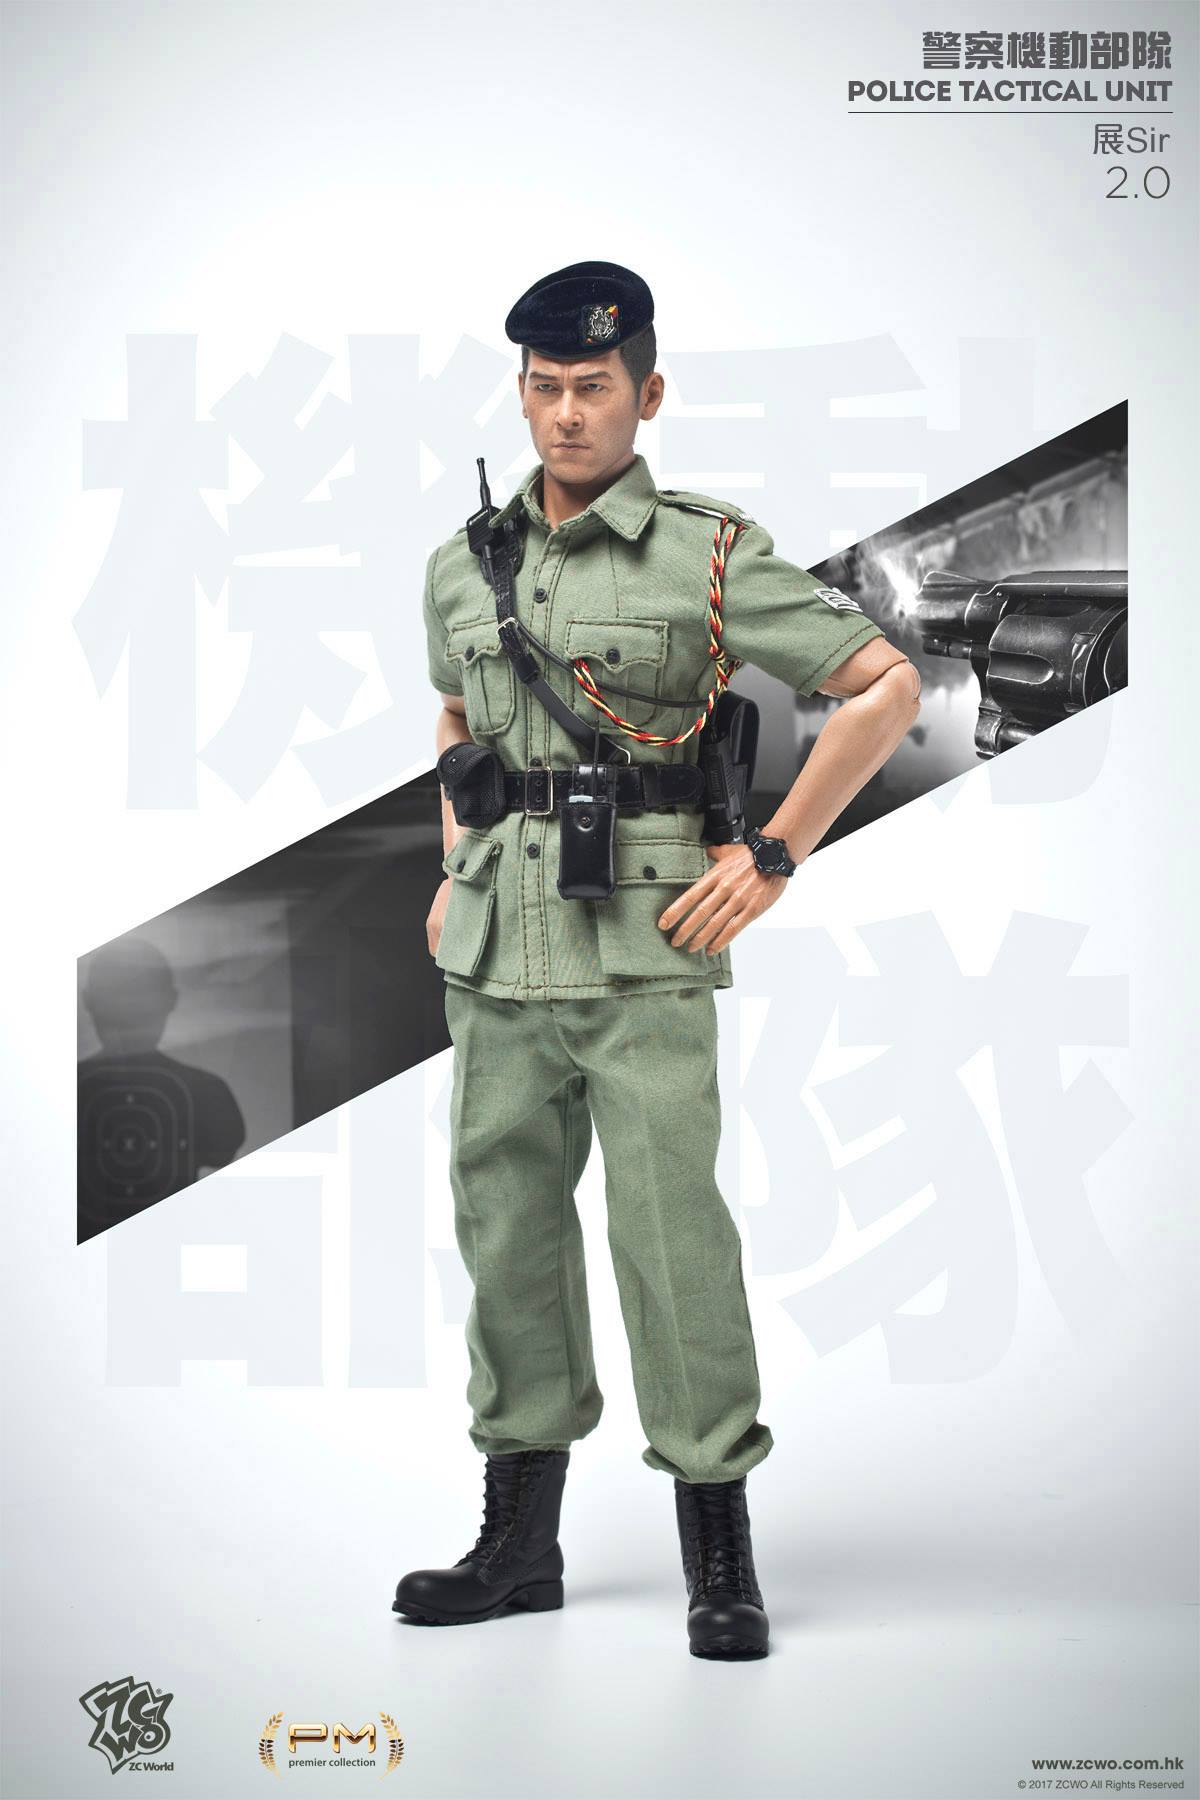 police tactical unit 警察机动部队 - 展sir 2.